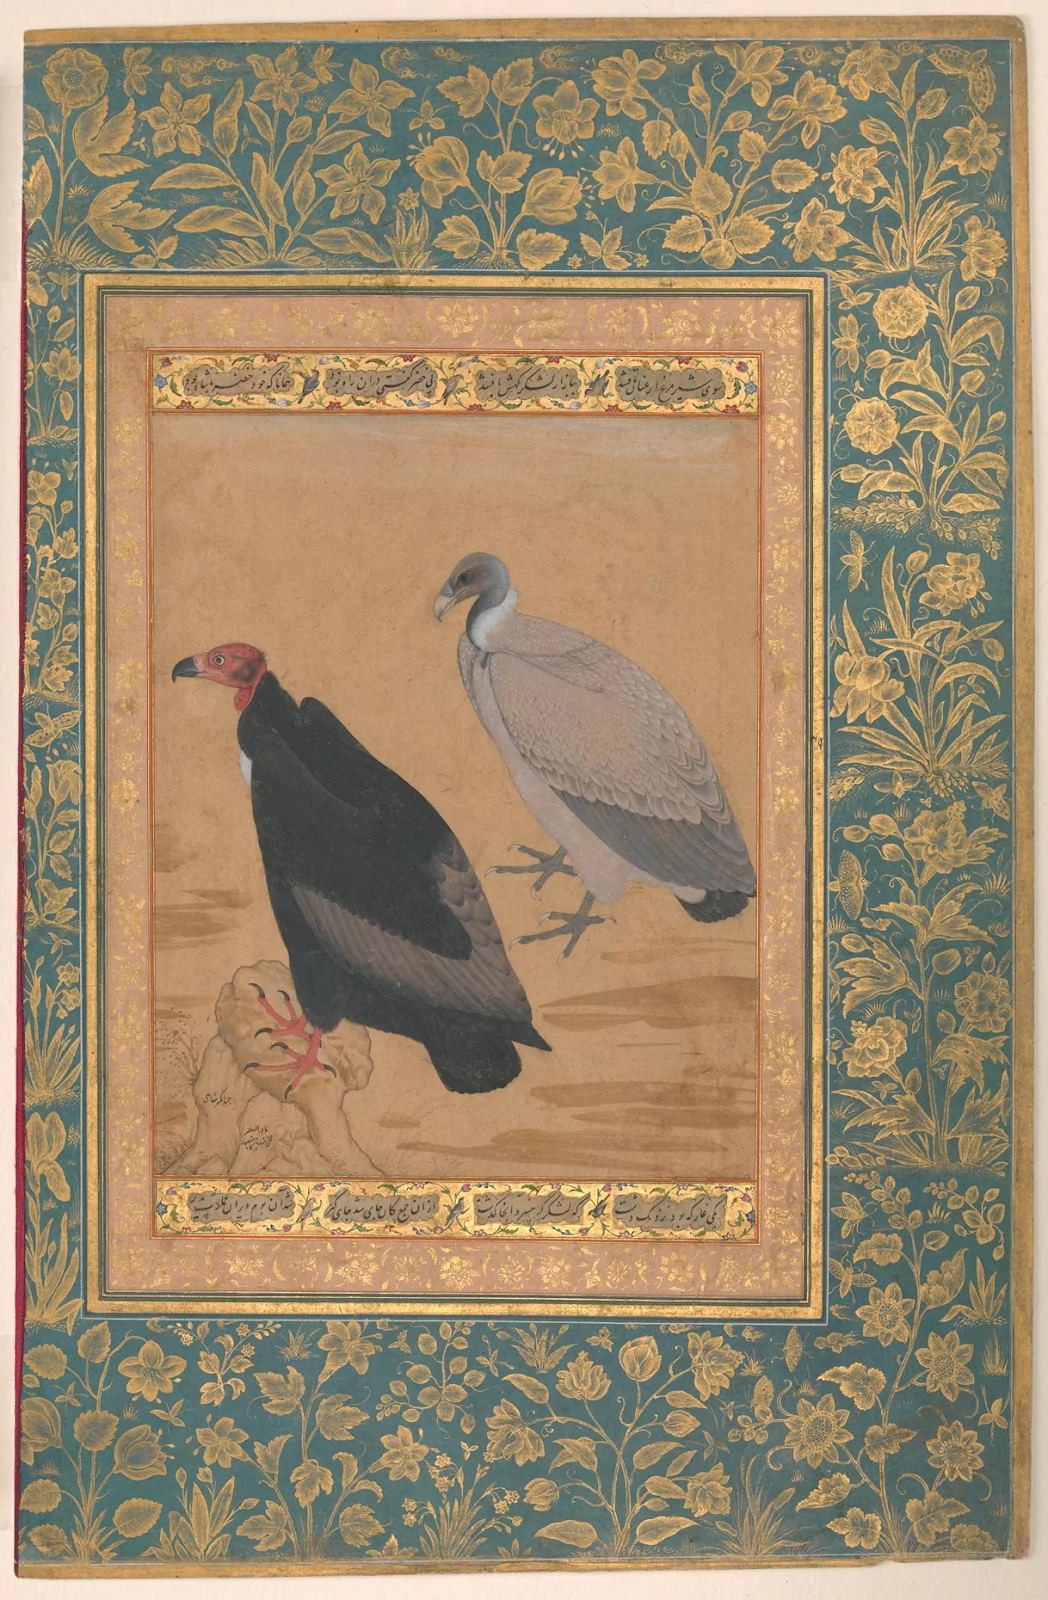 Indo-Persian art